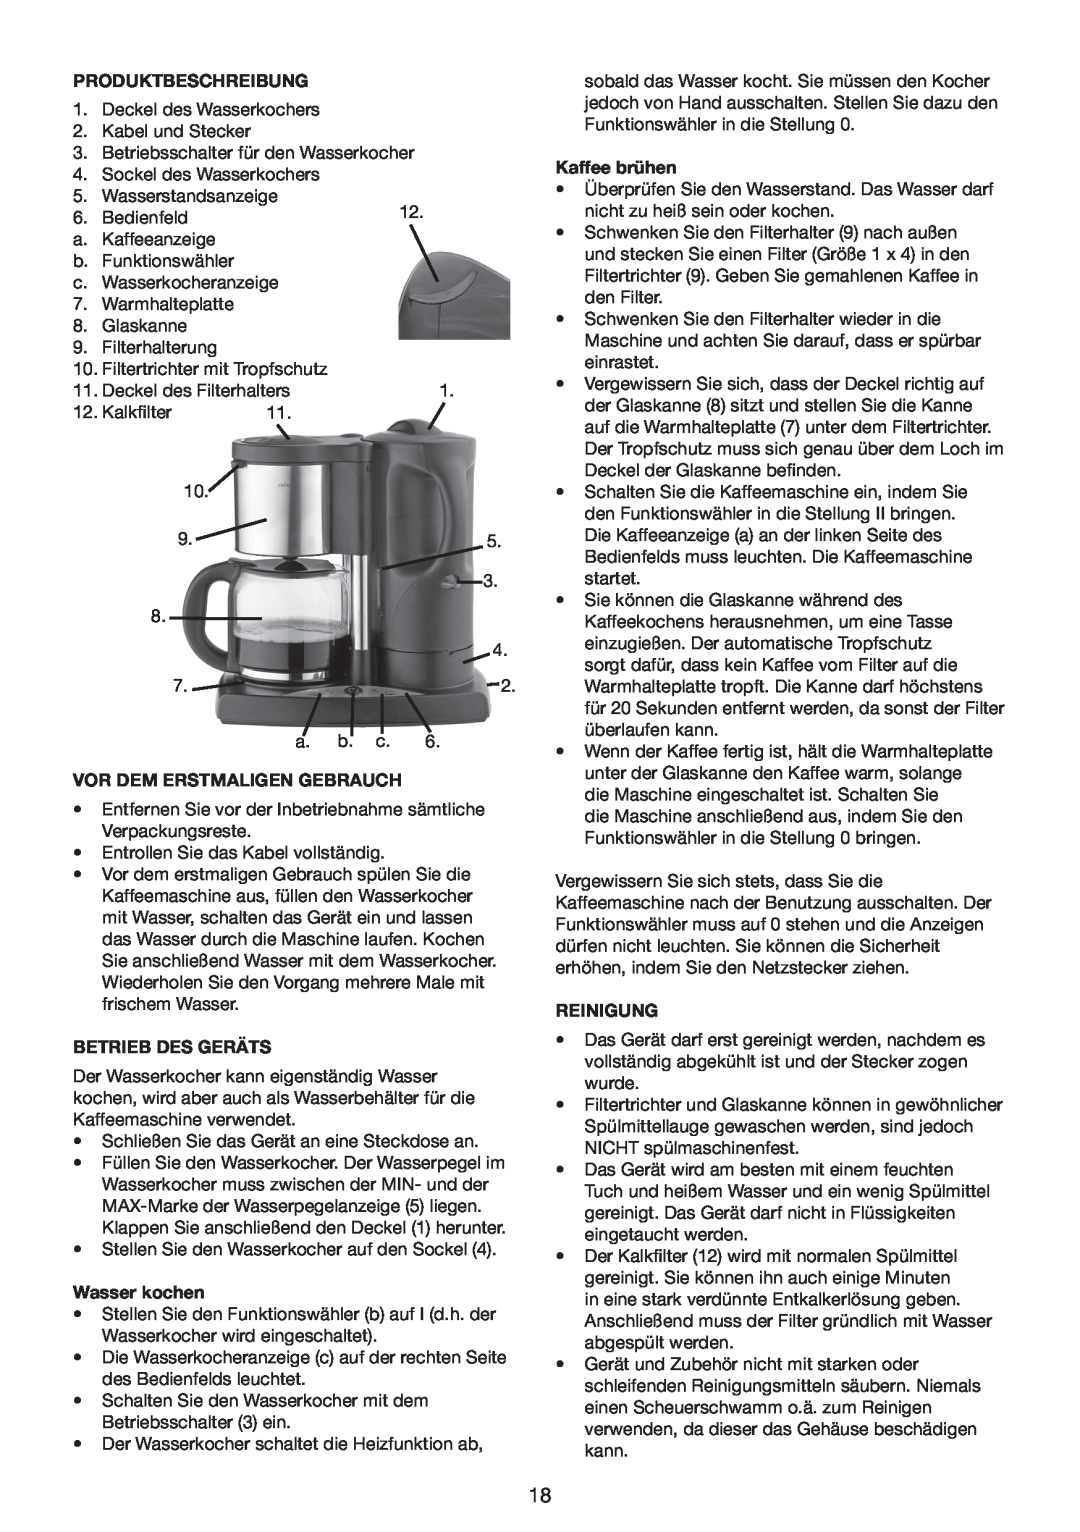 Melissa 645-089 manual Produktbeschreibung, Vor Dem Erstmaligen Gebrauch, Betrieb Des Geräts, Wasser kochen, Kaffee brühen 